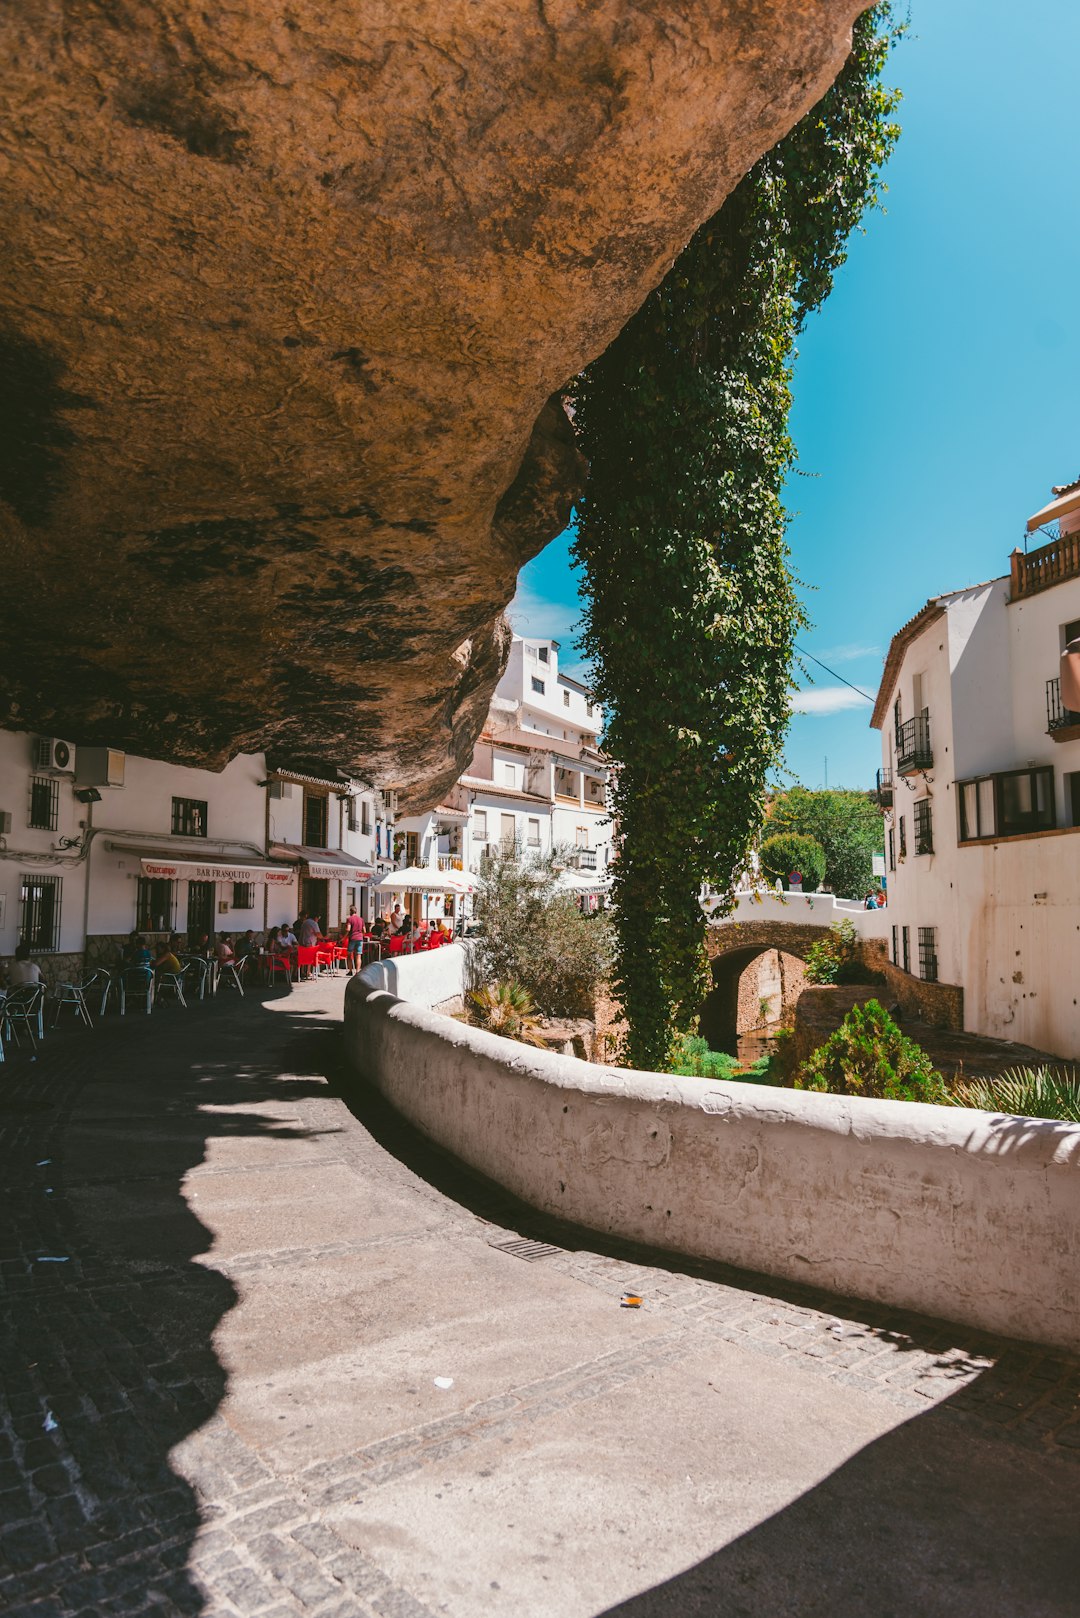 Travel Tips and Stories of Setenil de las Bodegas in Spain